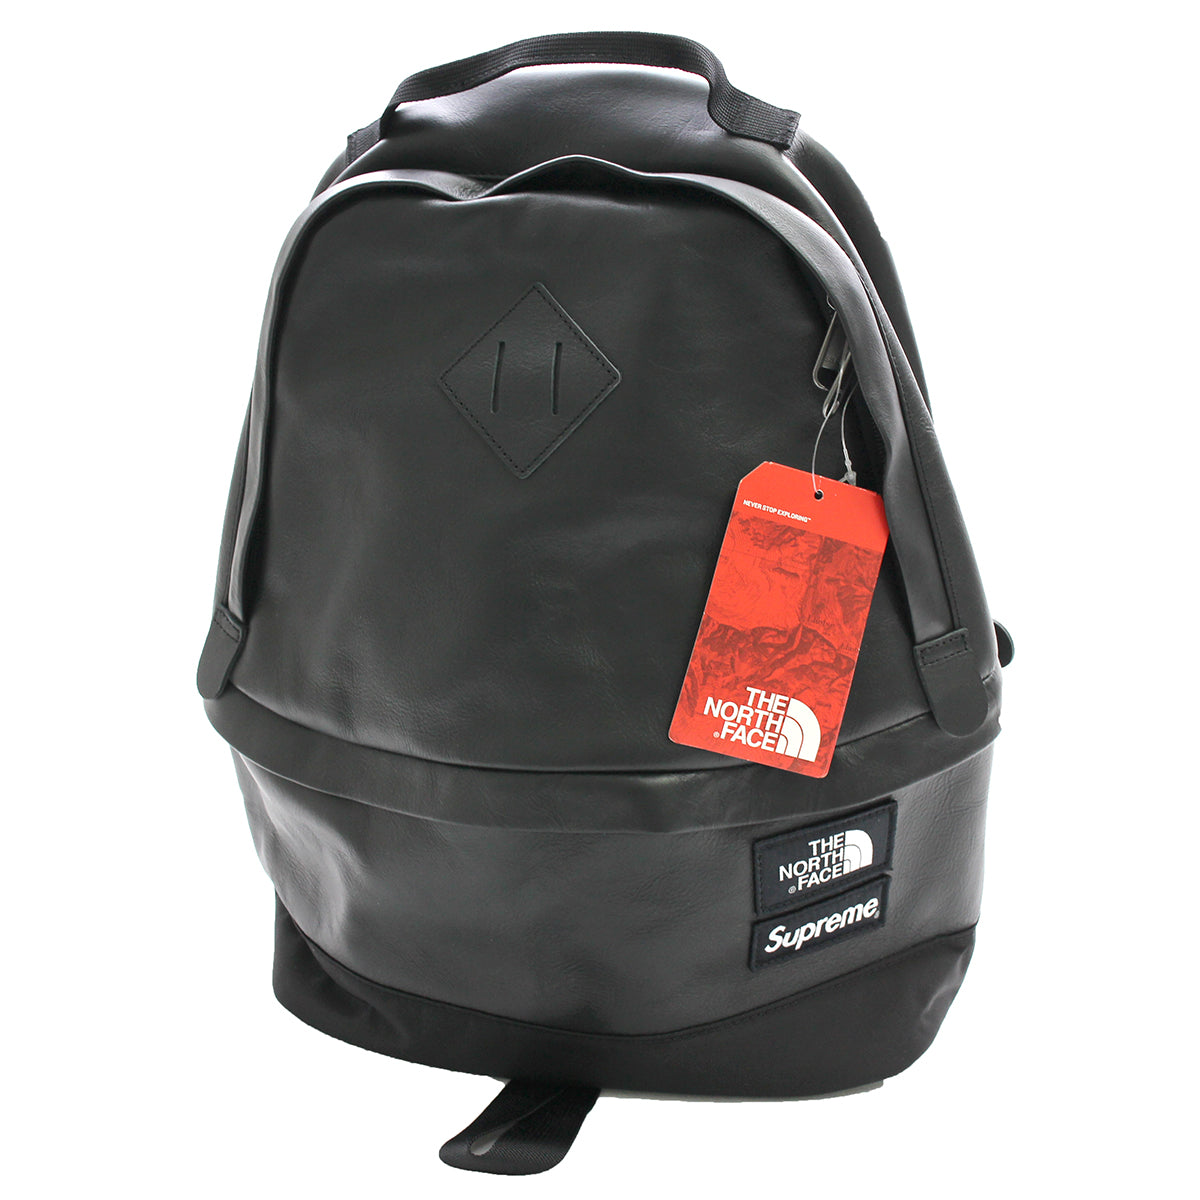 supreme backpack 2017FW 黒